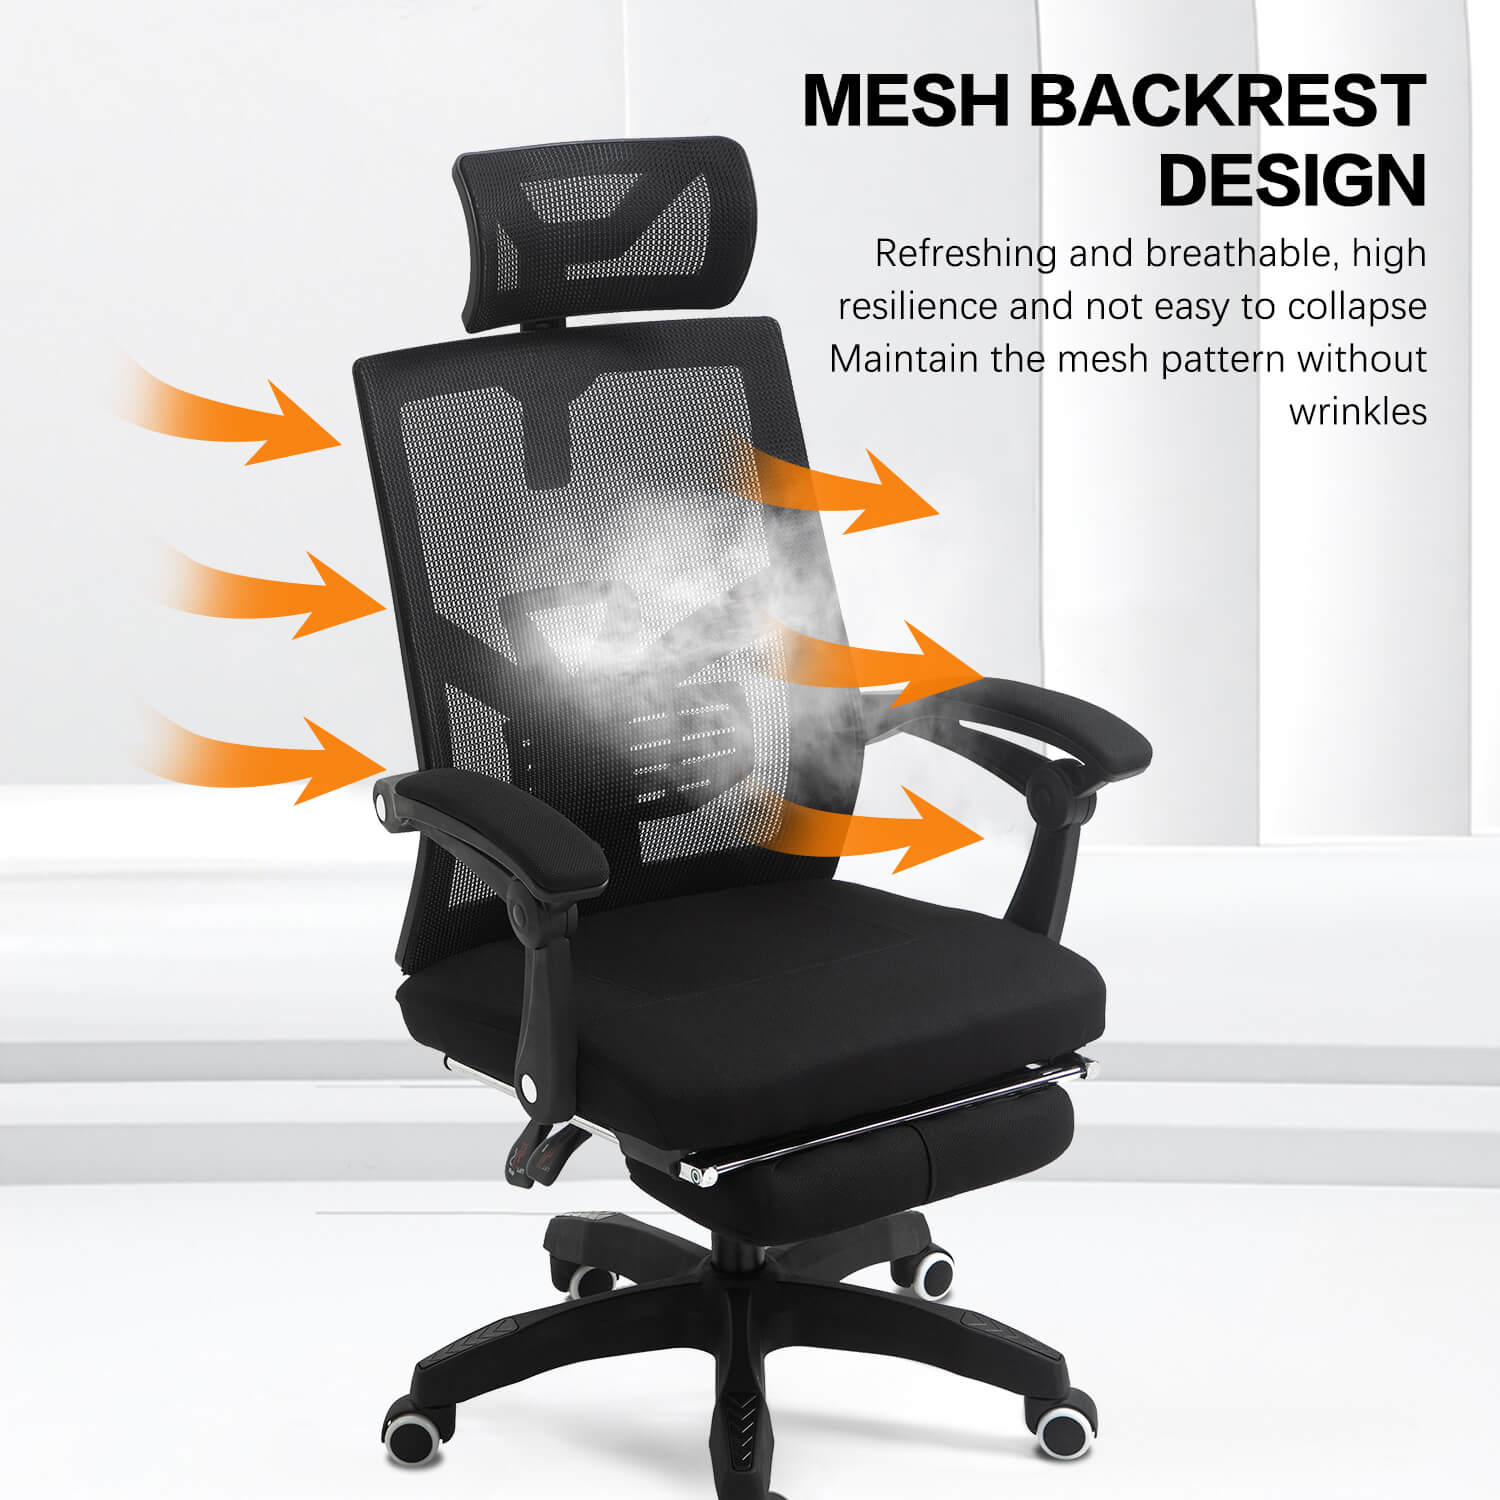 ECVV Ergonomic Adjustable Office Chair High Back Computer; ECVV